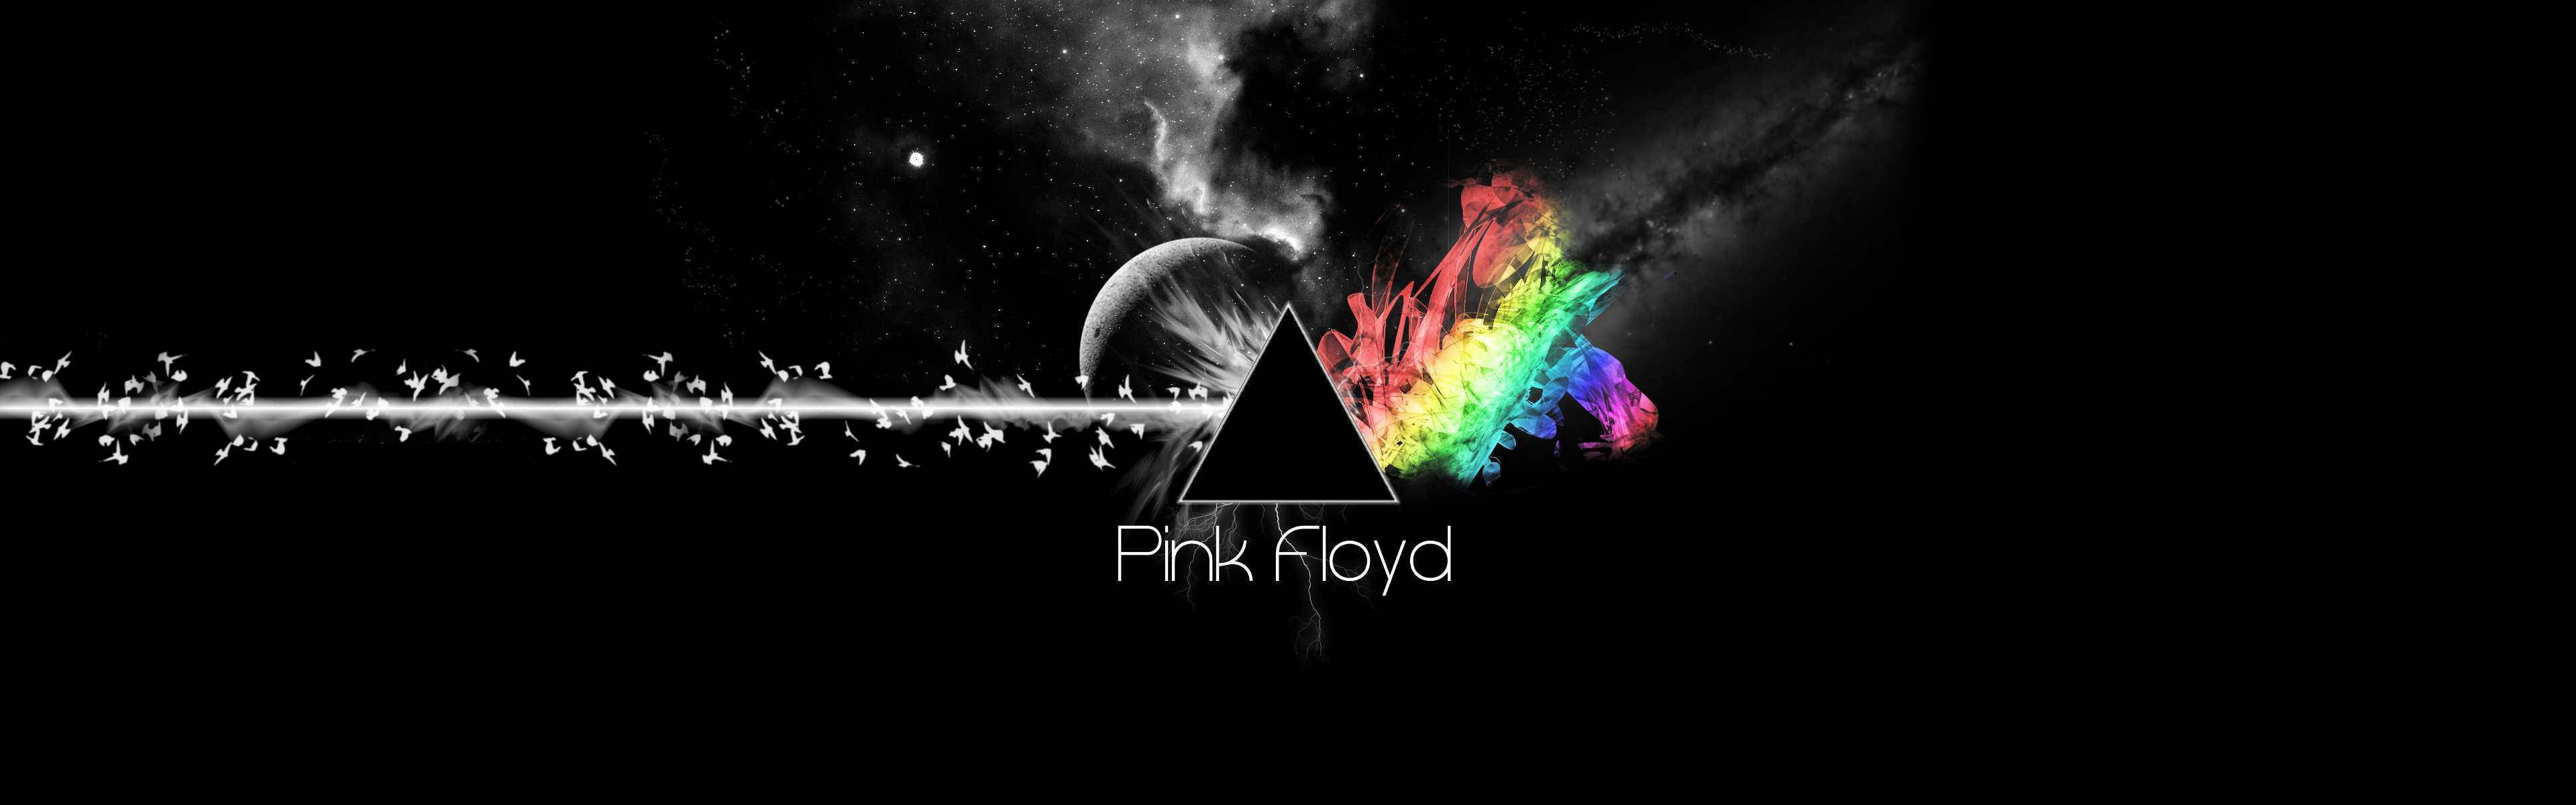 Related Pictures Pink Floyd Wallpaper Desktop Background